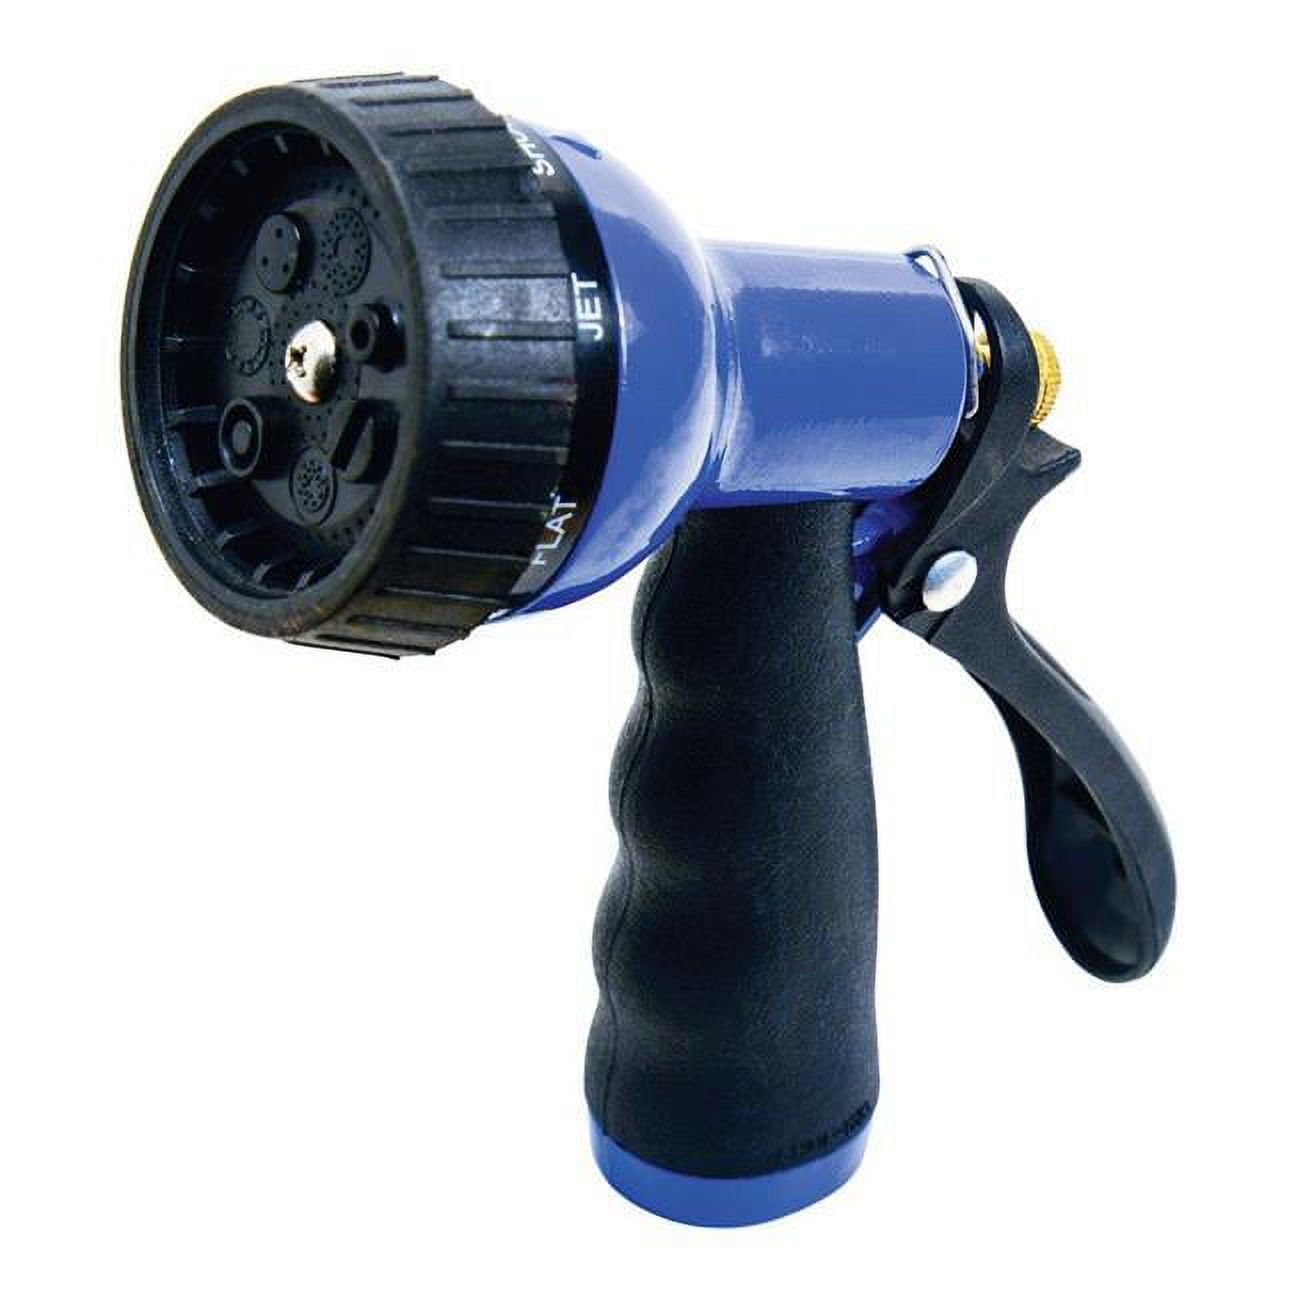 Rugg 7690134 9-pattern Plastic Sprayer, Blue